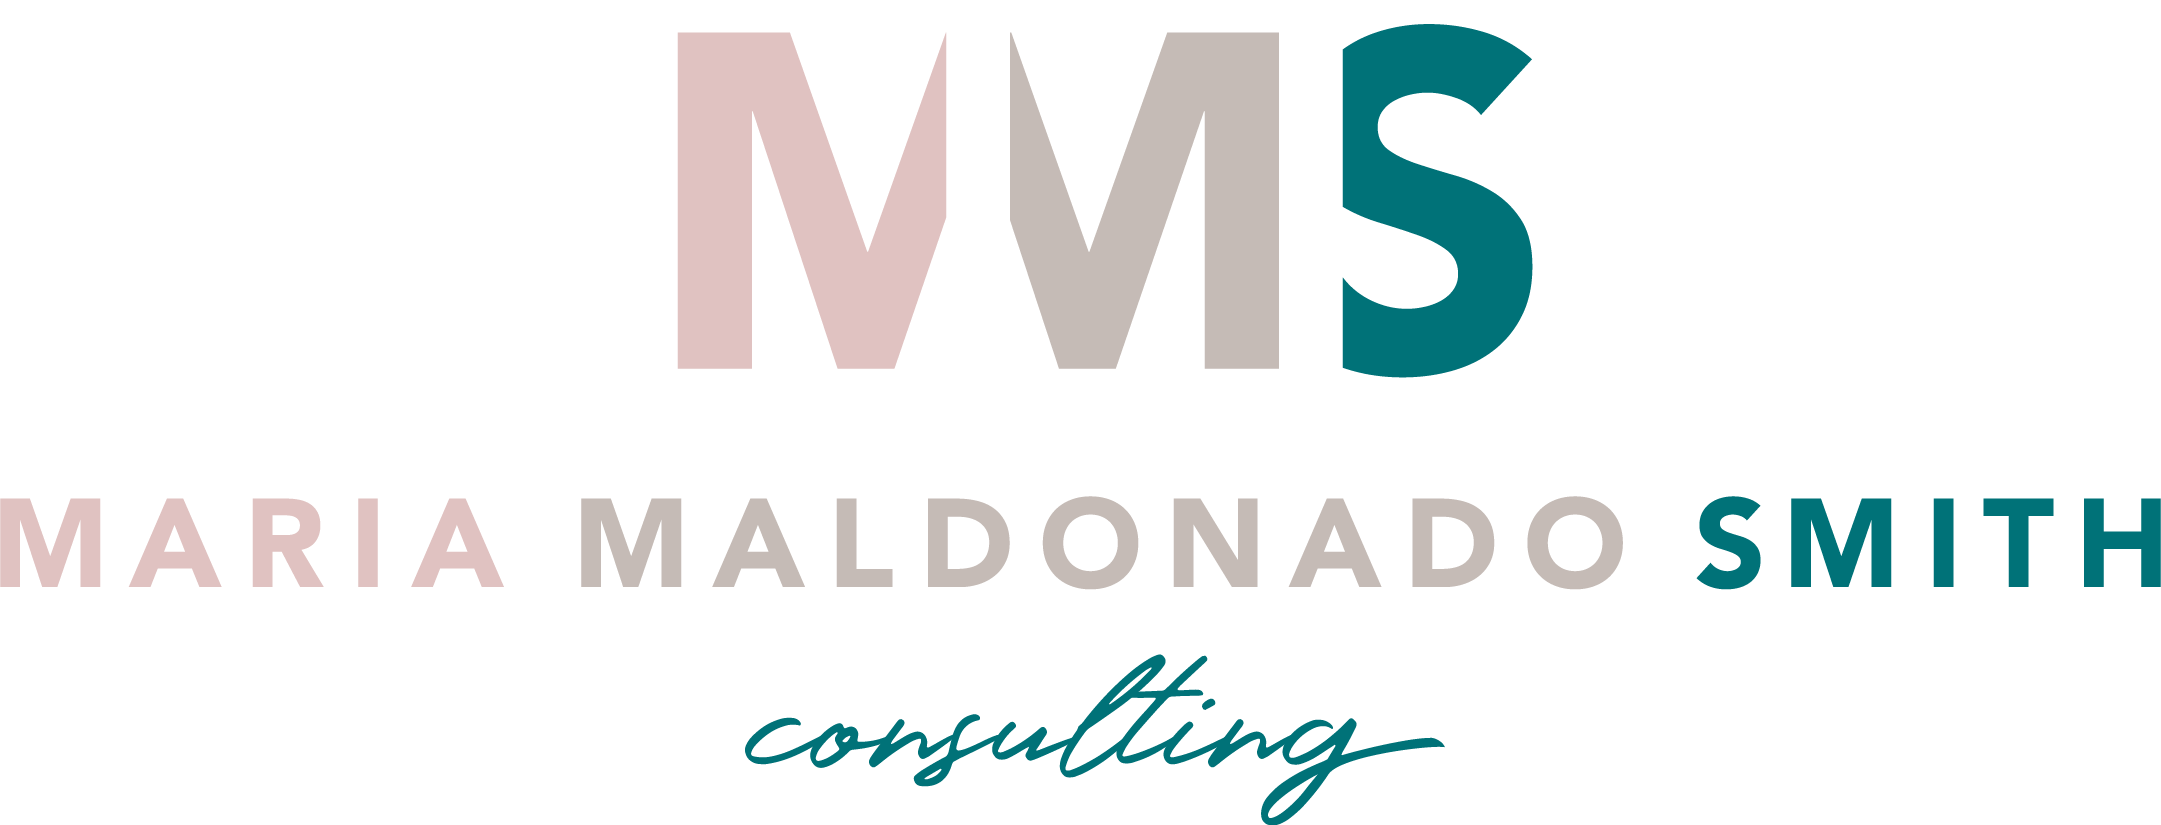 Maria Maldonado Smith Consulting